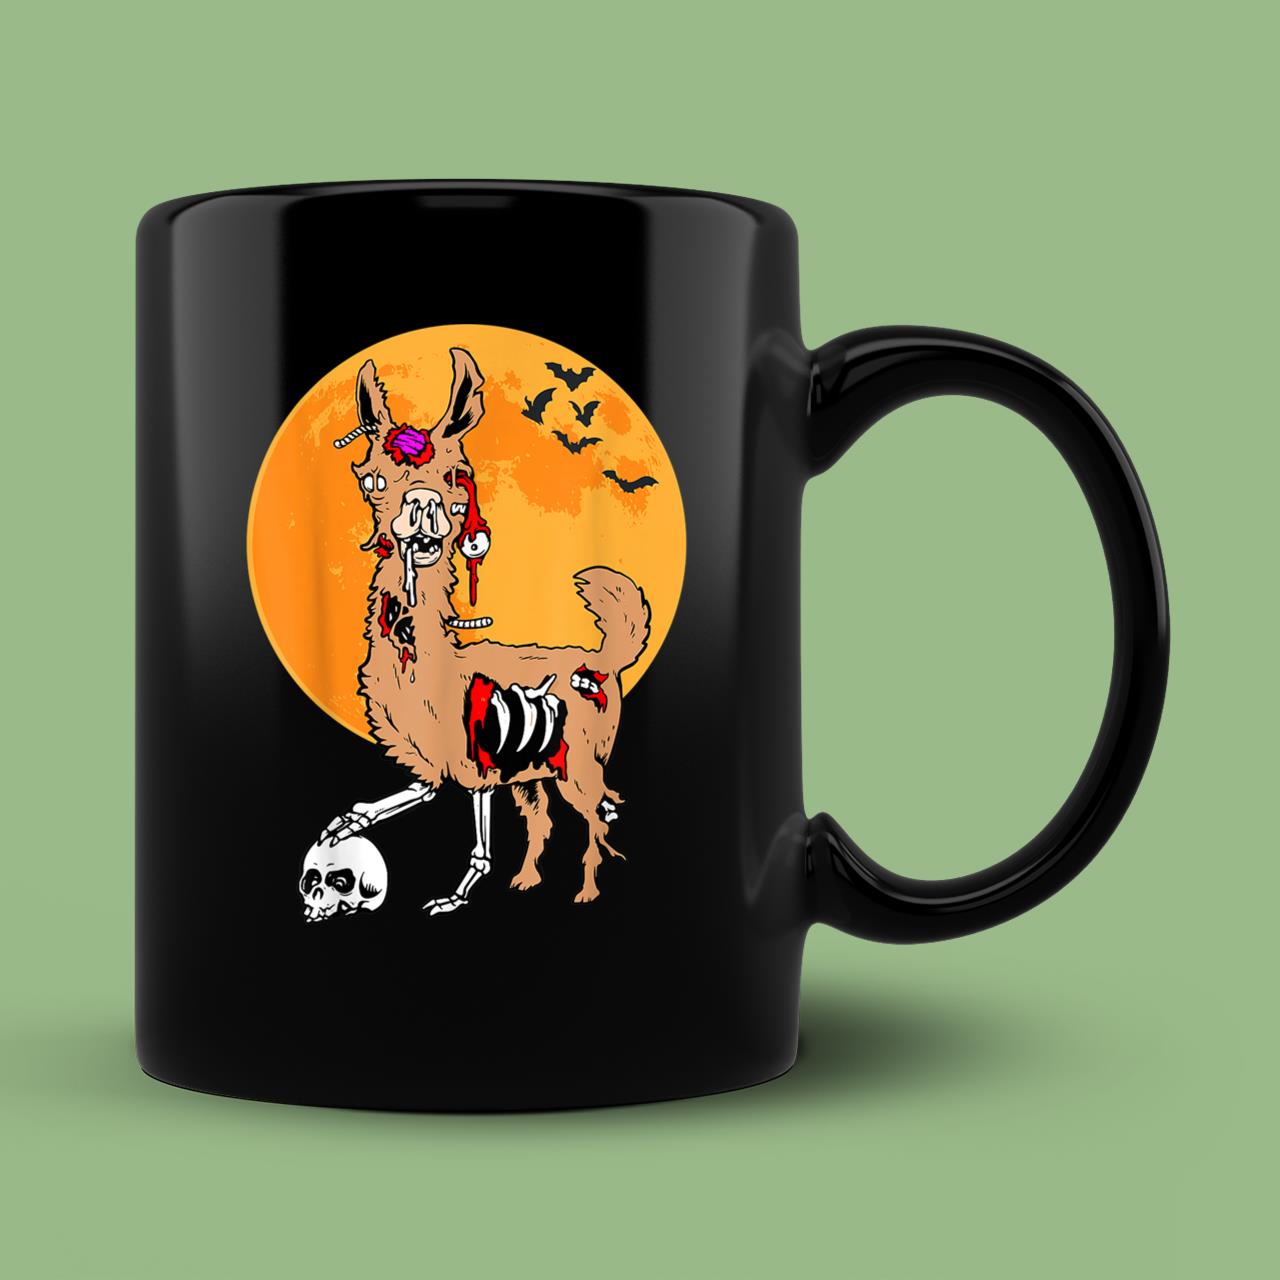 Skitongift Ceramic Novelty Coffee Mug Zombie Llama Funny Spooky Halloween Costume Mug